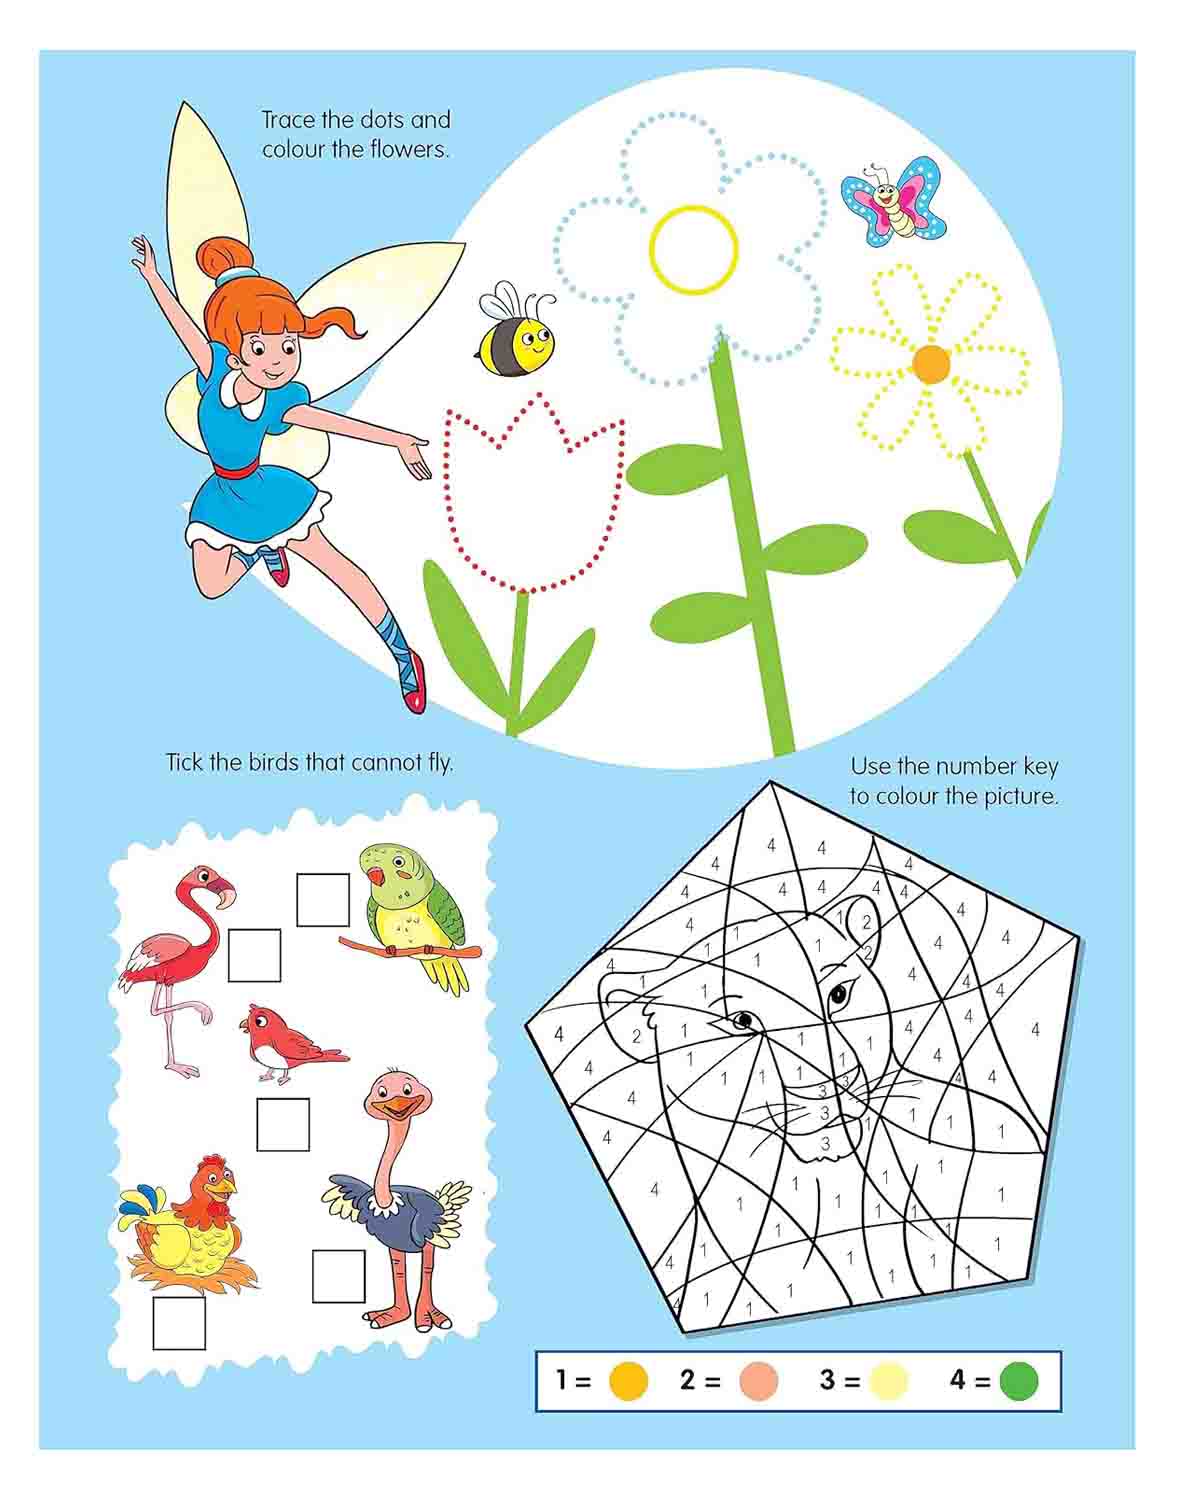 Om Books International 500 Activities for Kids Book- 2 - 9789395701969